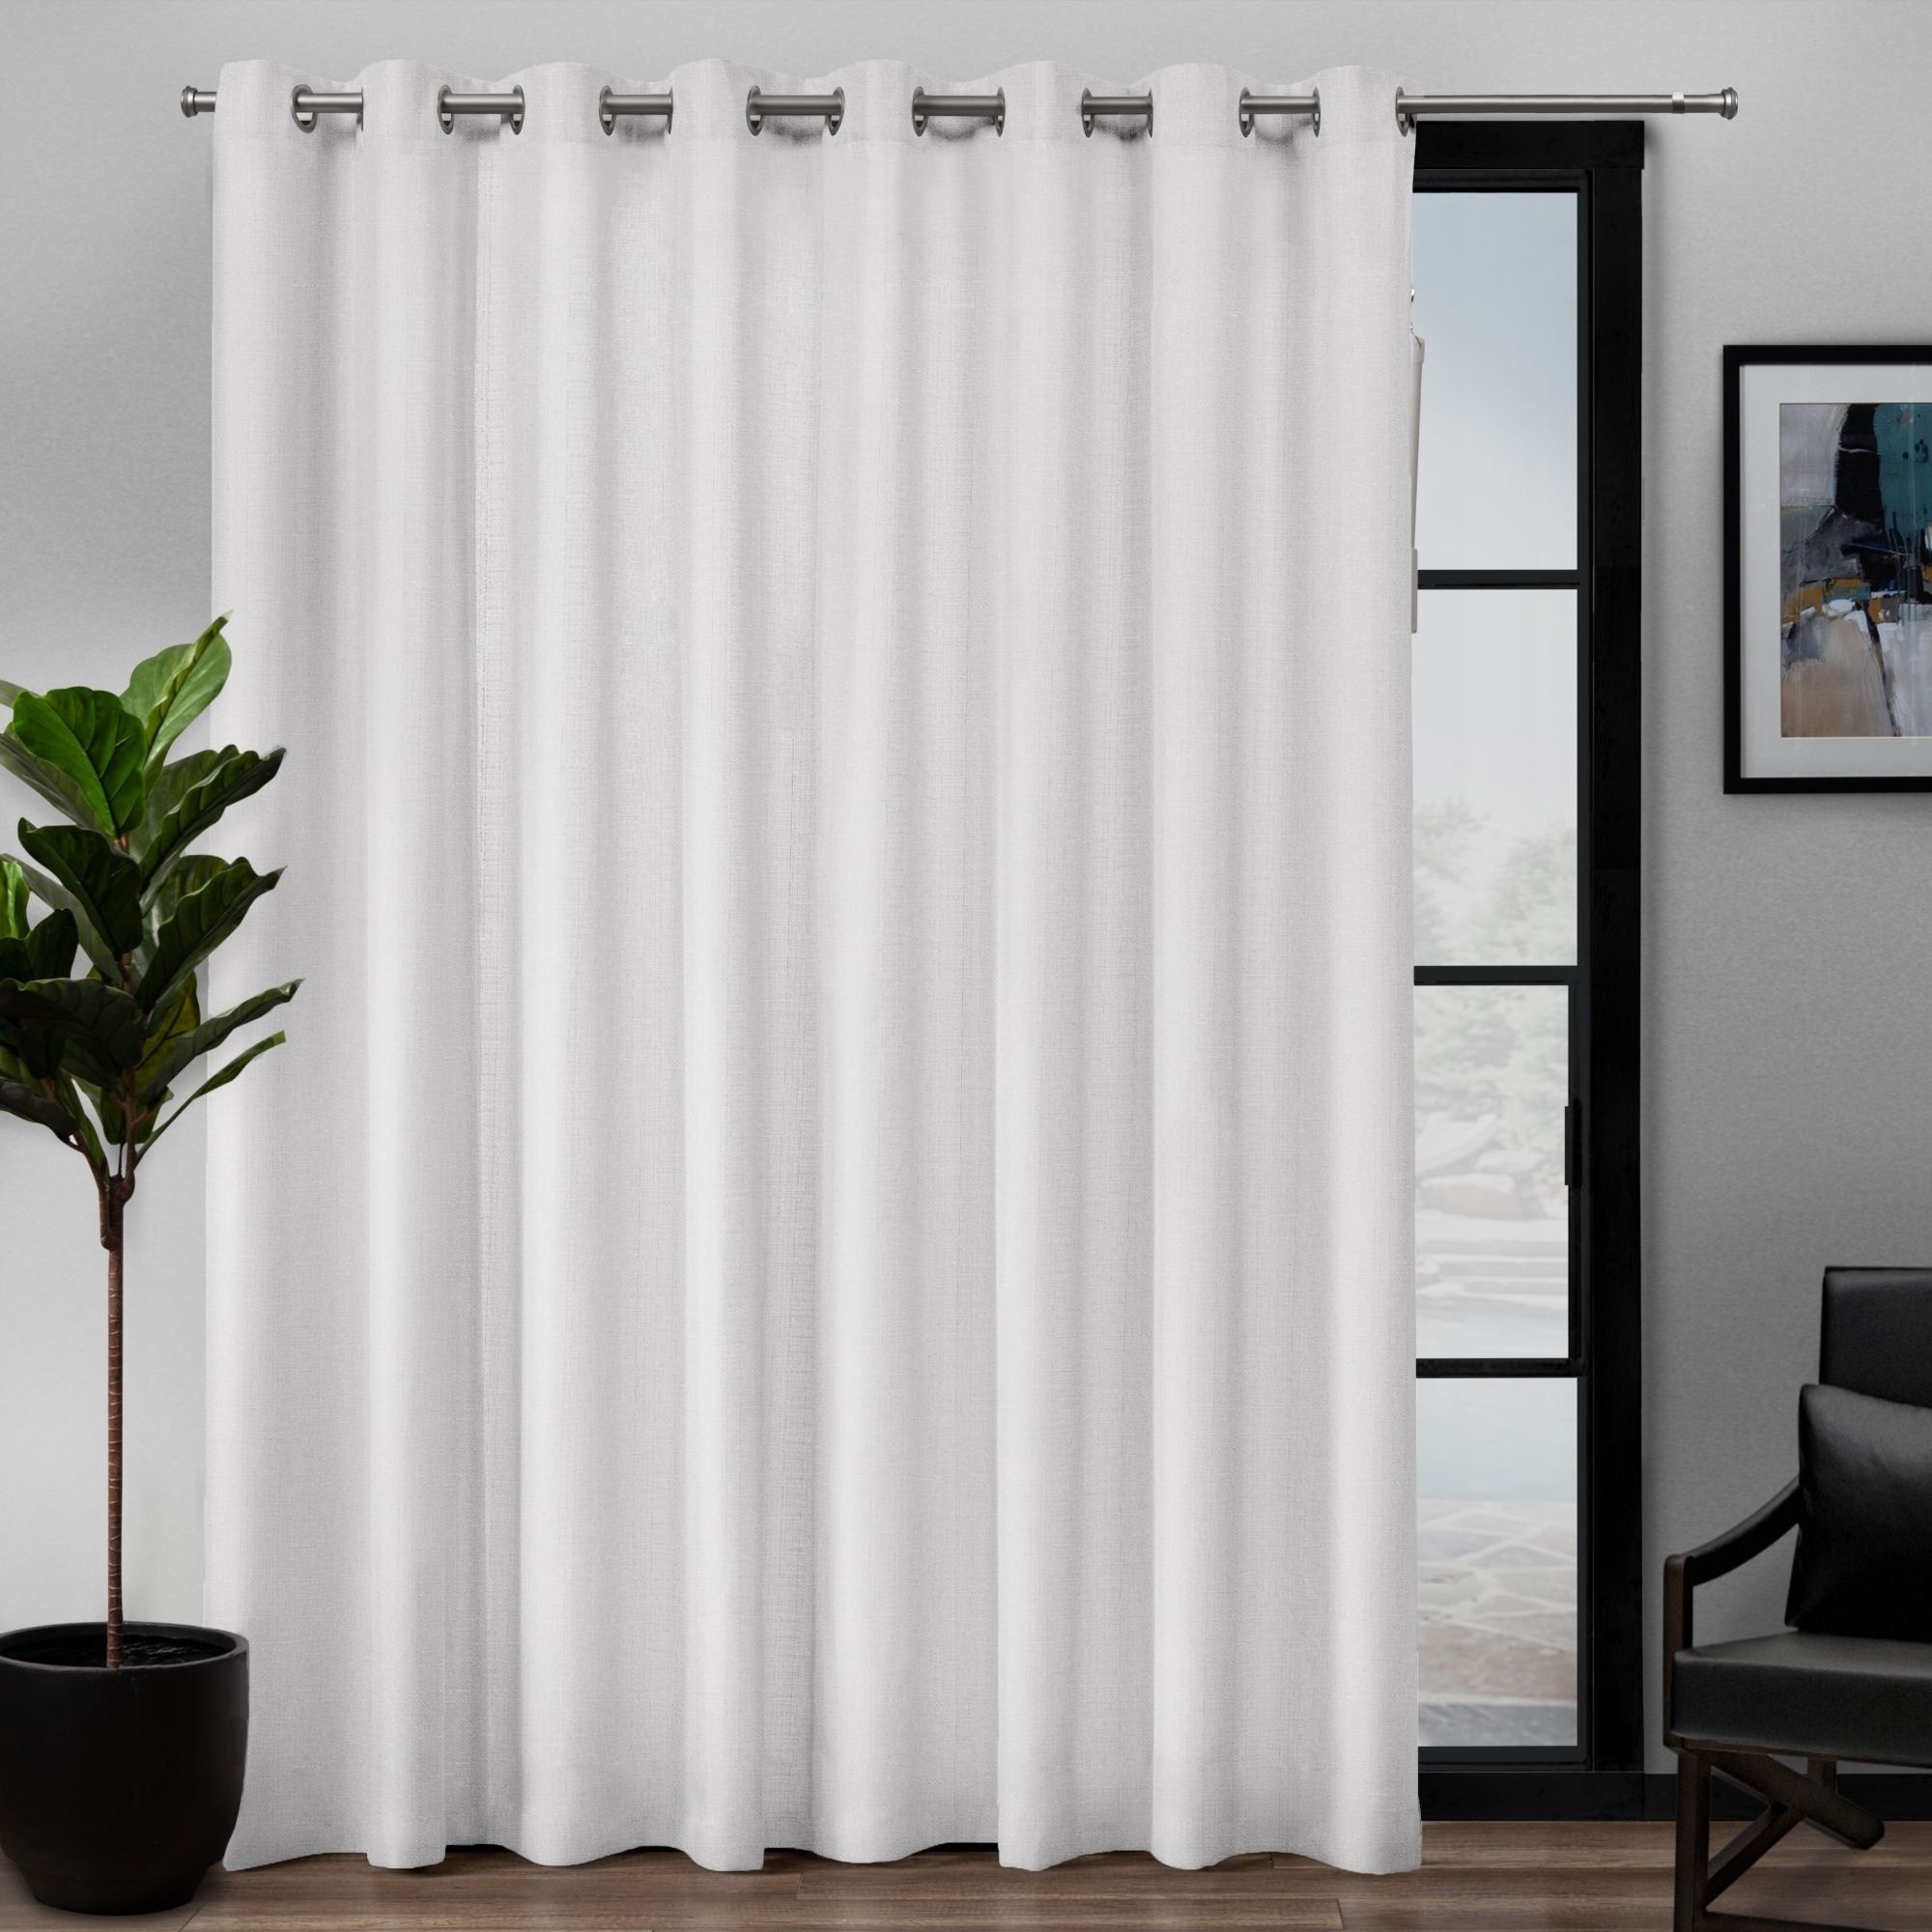 Ati Home Loha Patio Grommet Top Single Curtain Panel – 108x84 Inside Patio Grommet Top Single Curtain Panels (View 2 of 20)